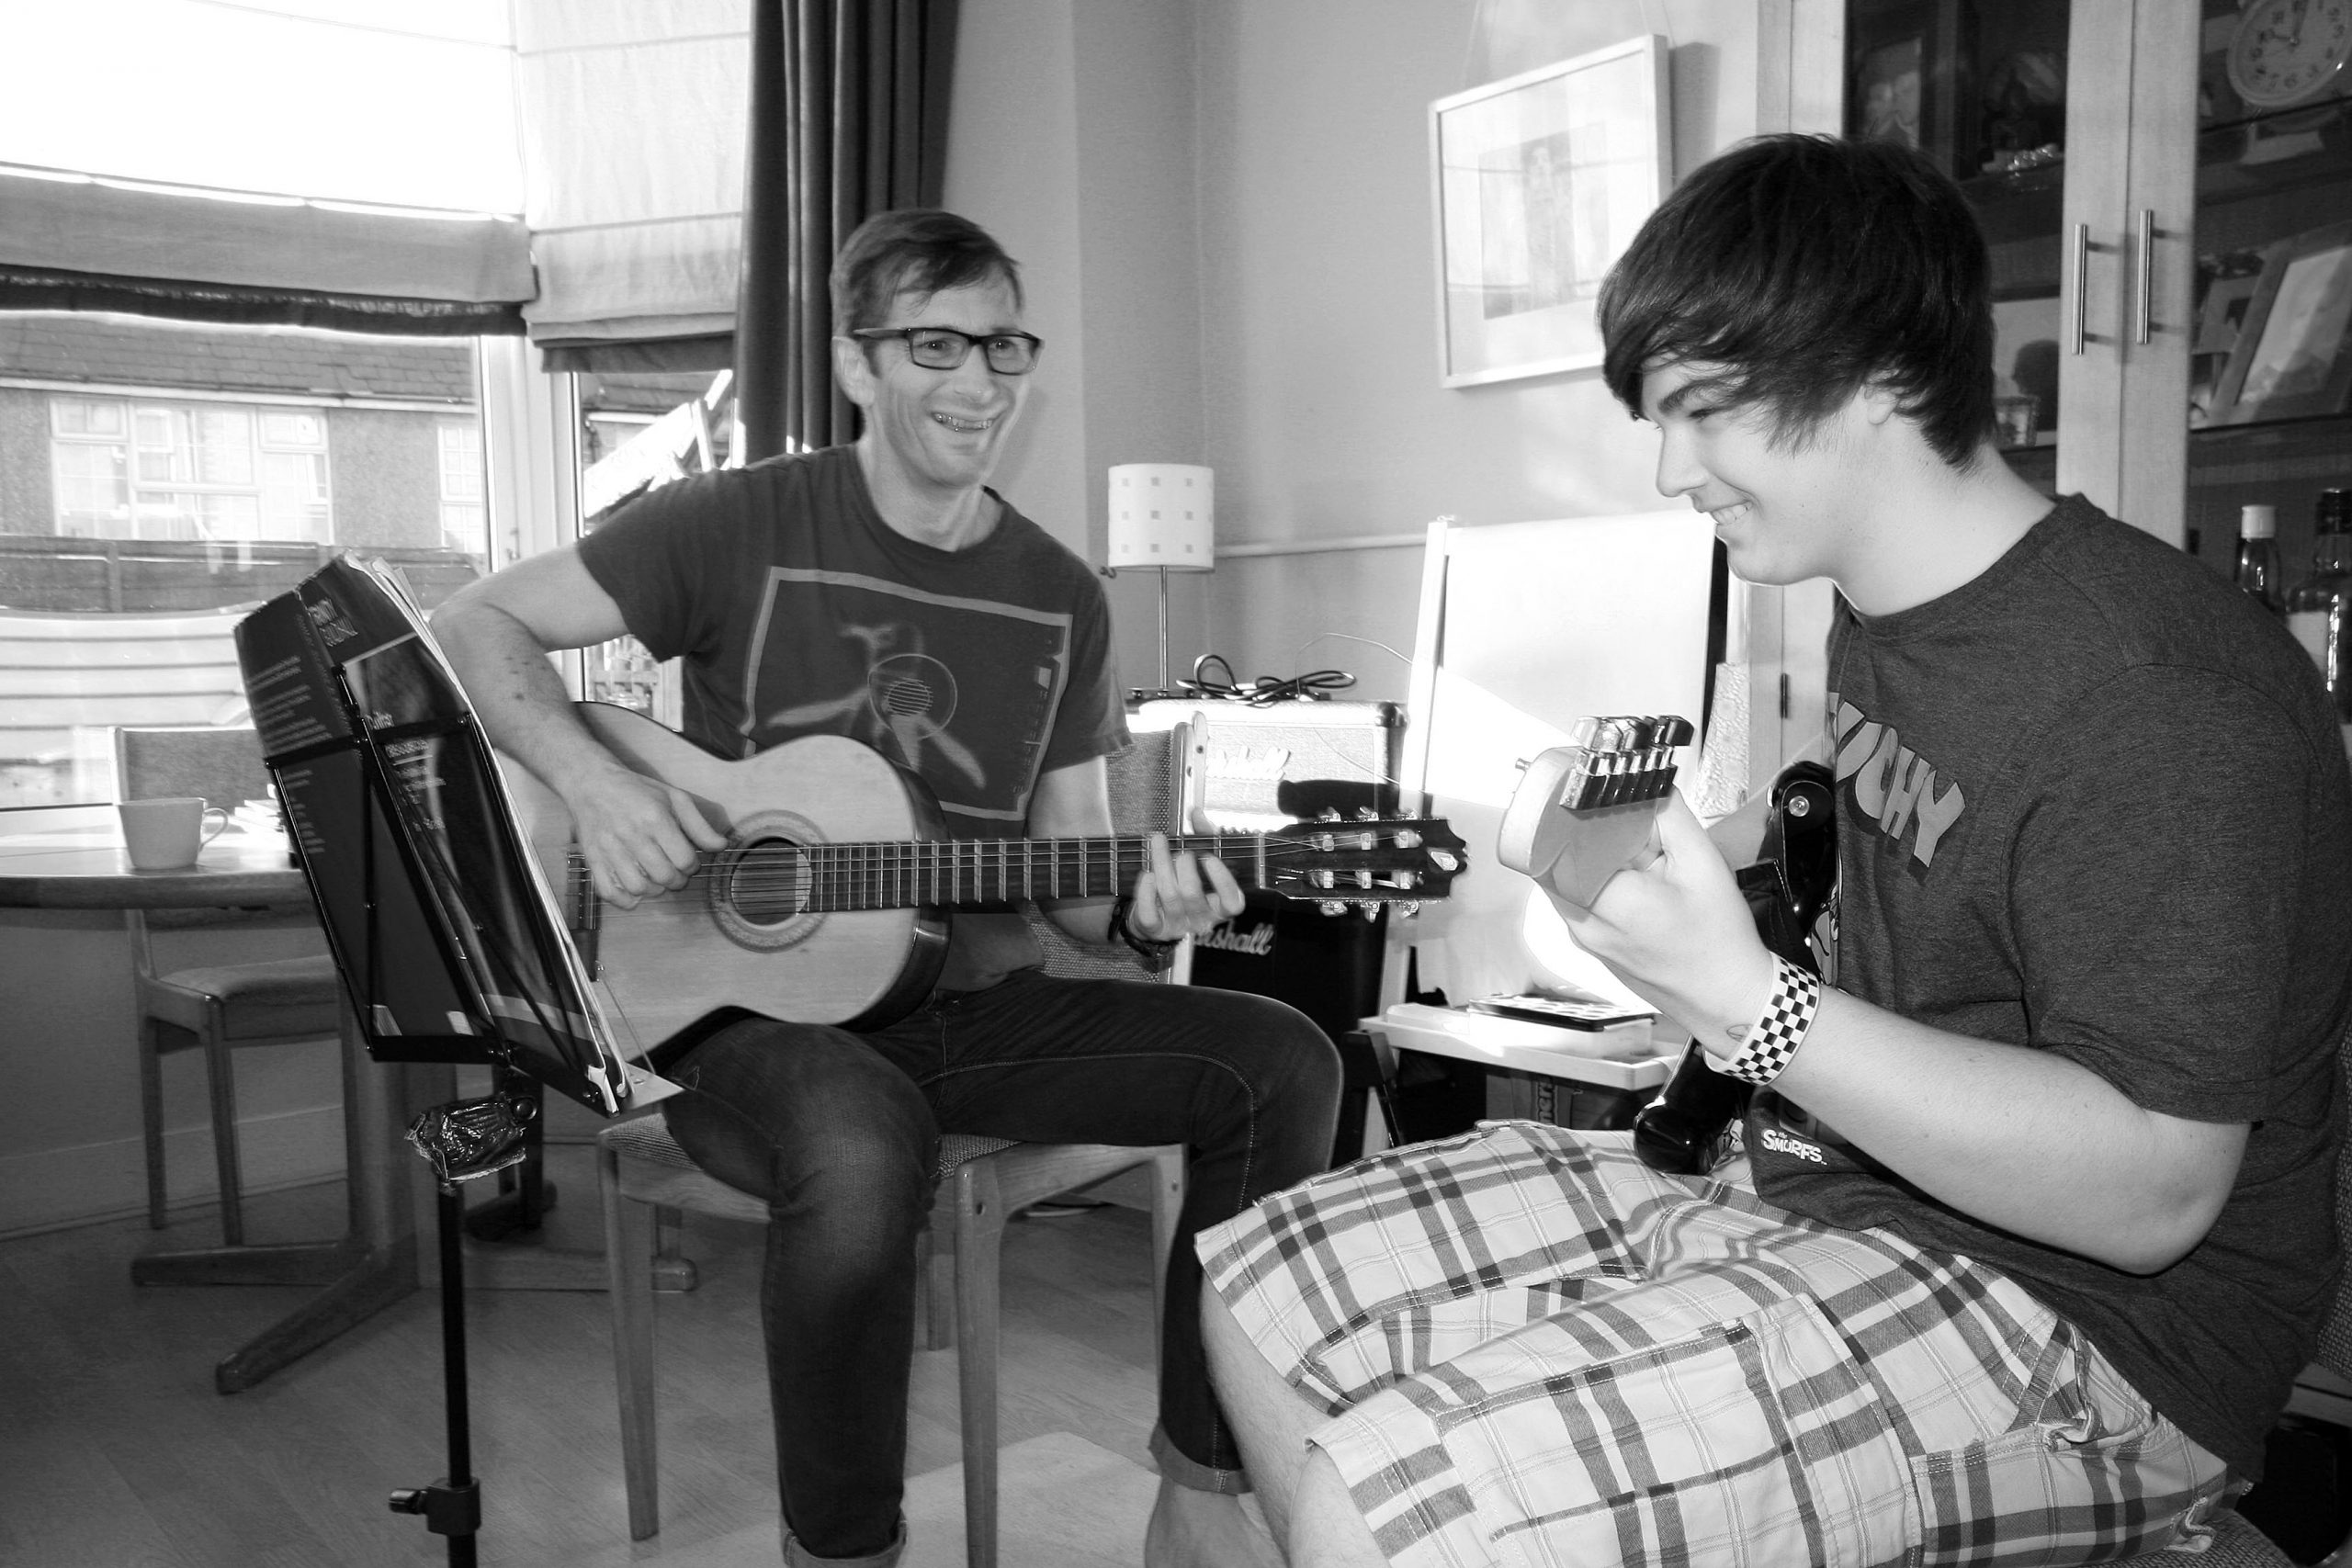 Richard and Alaister enjoying their guitar lesson in felpham